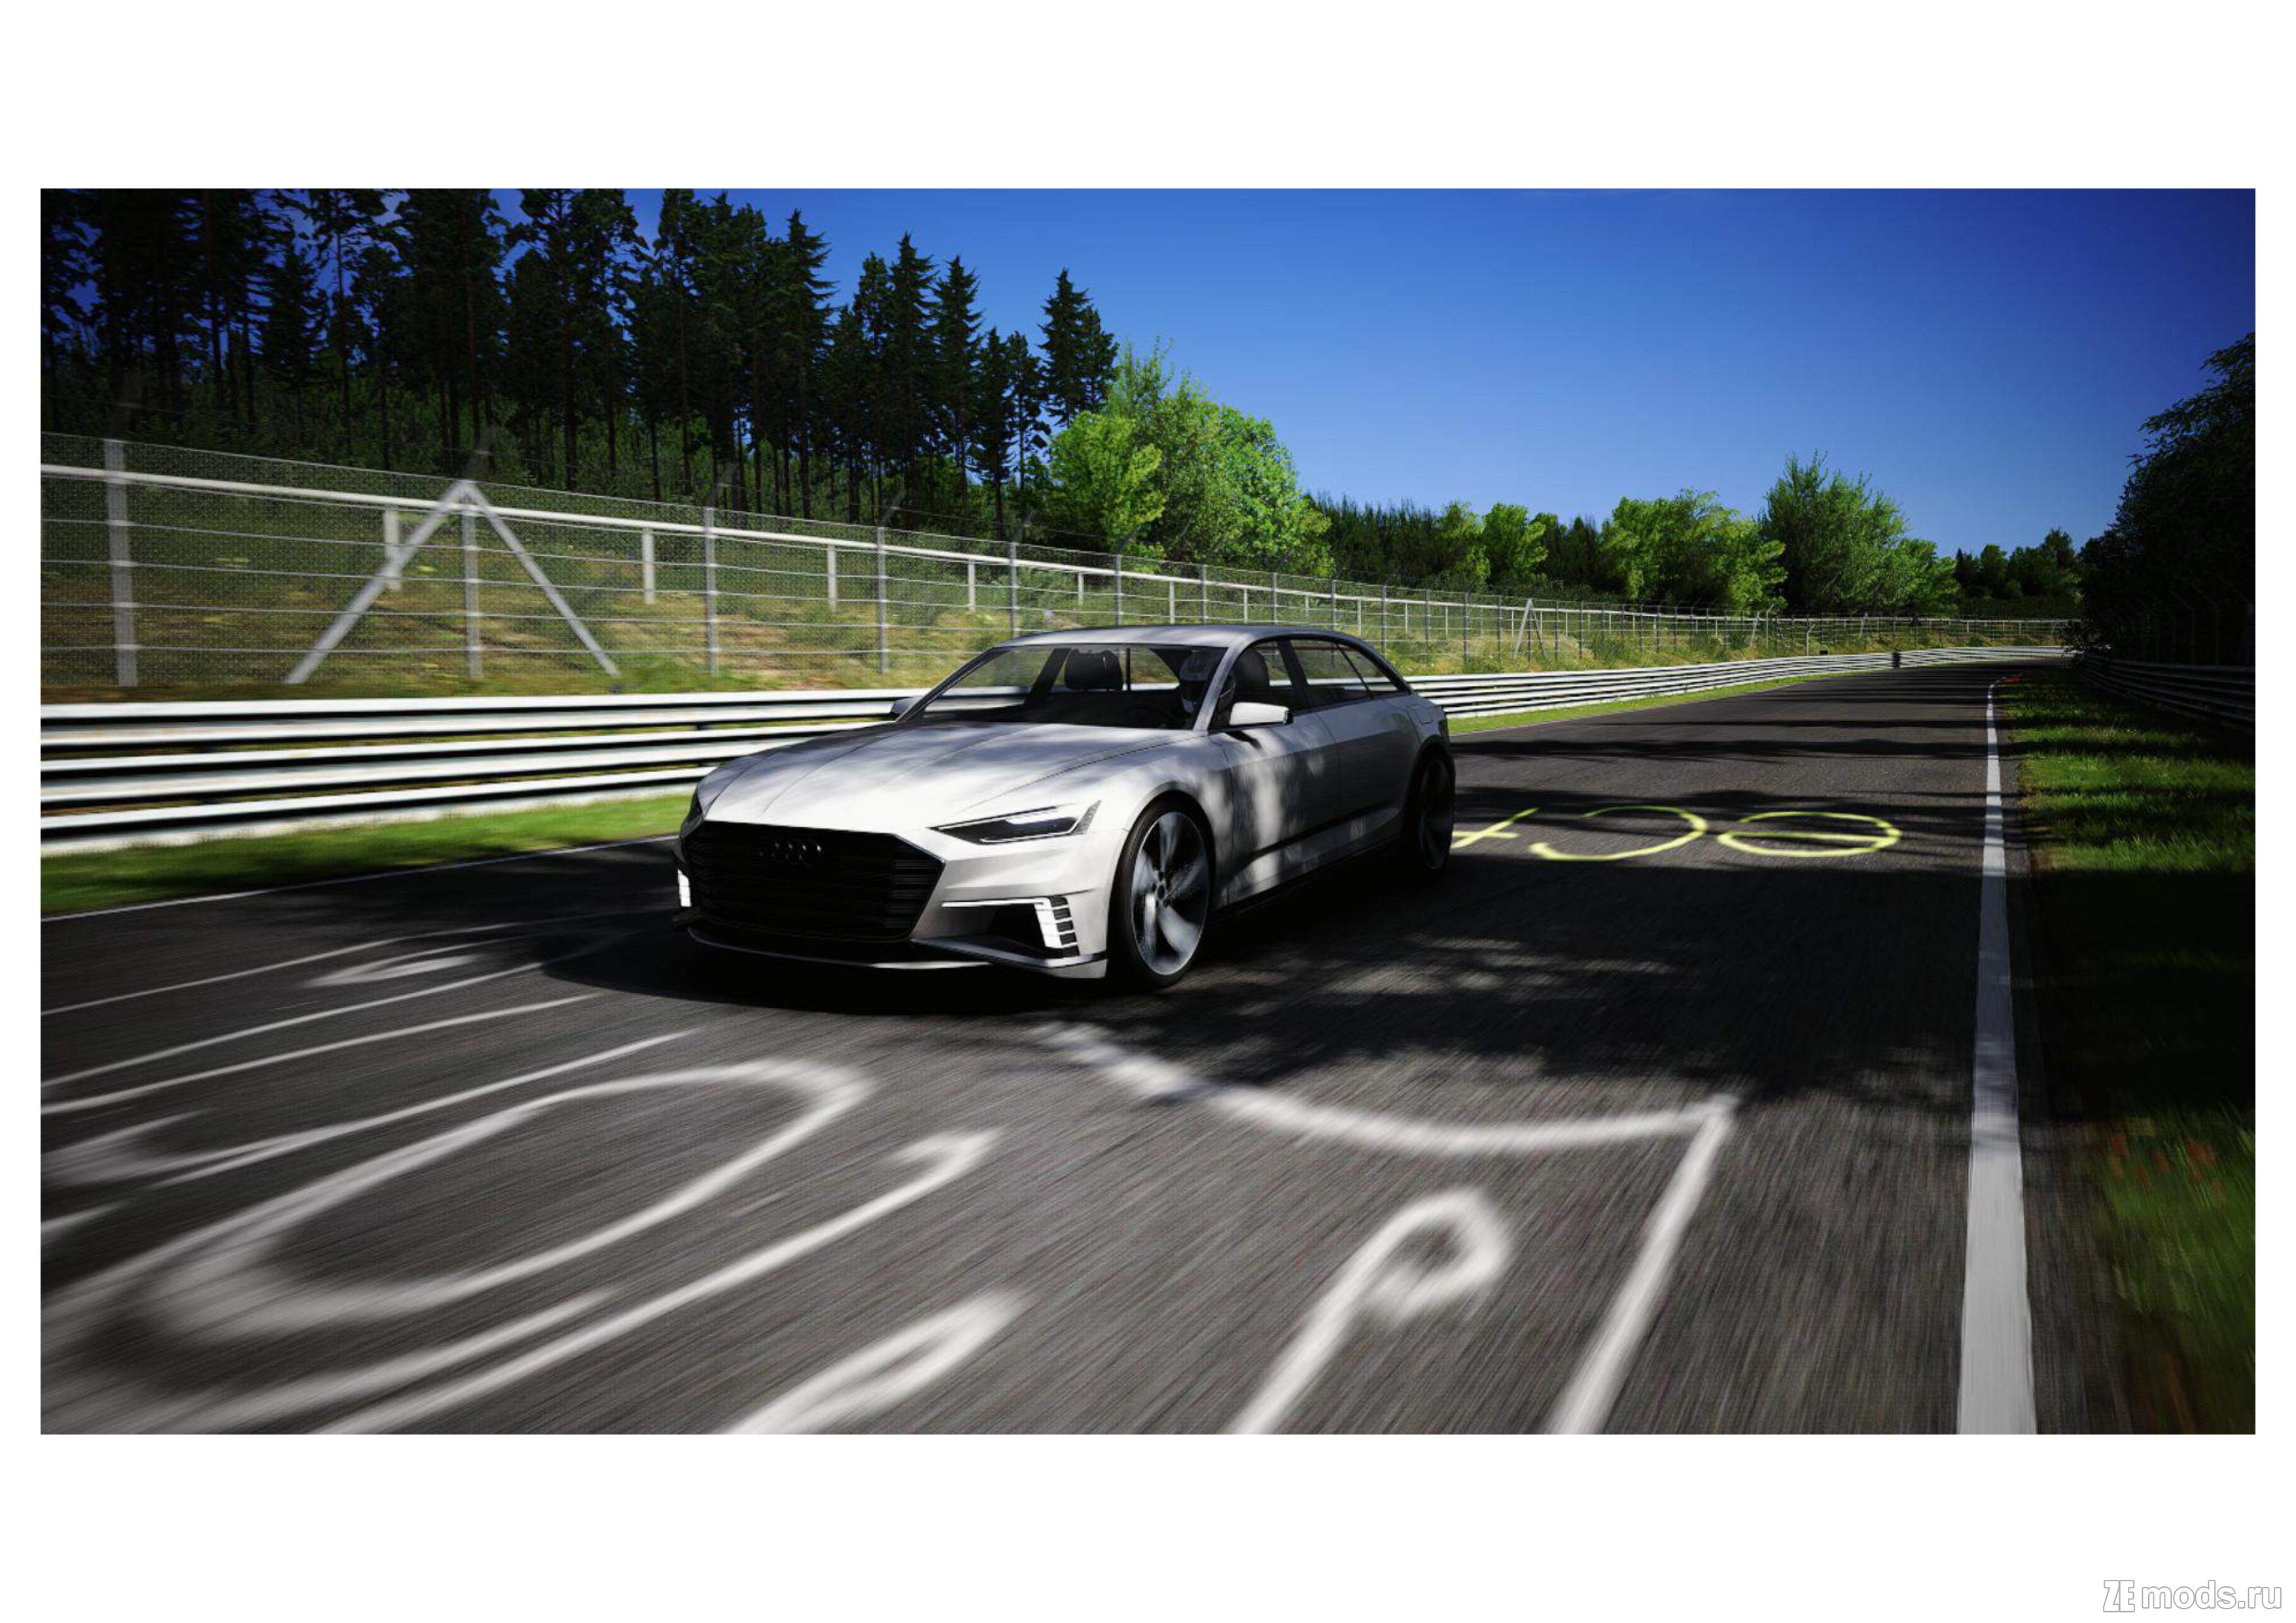 Audi Prologue Avant Concept (v1.1) для Assetto Corsa